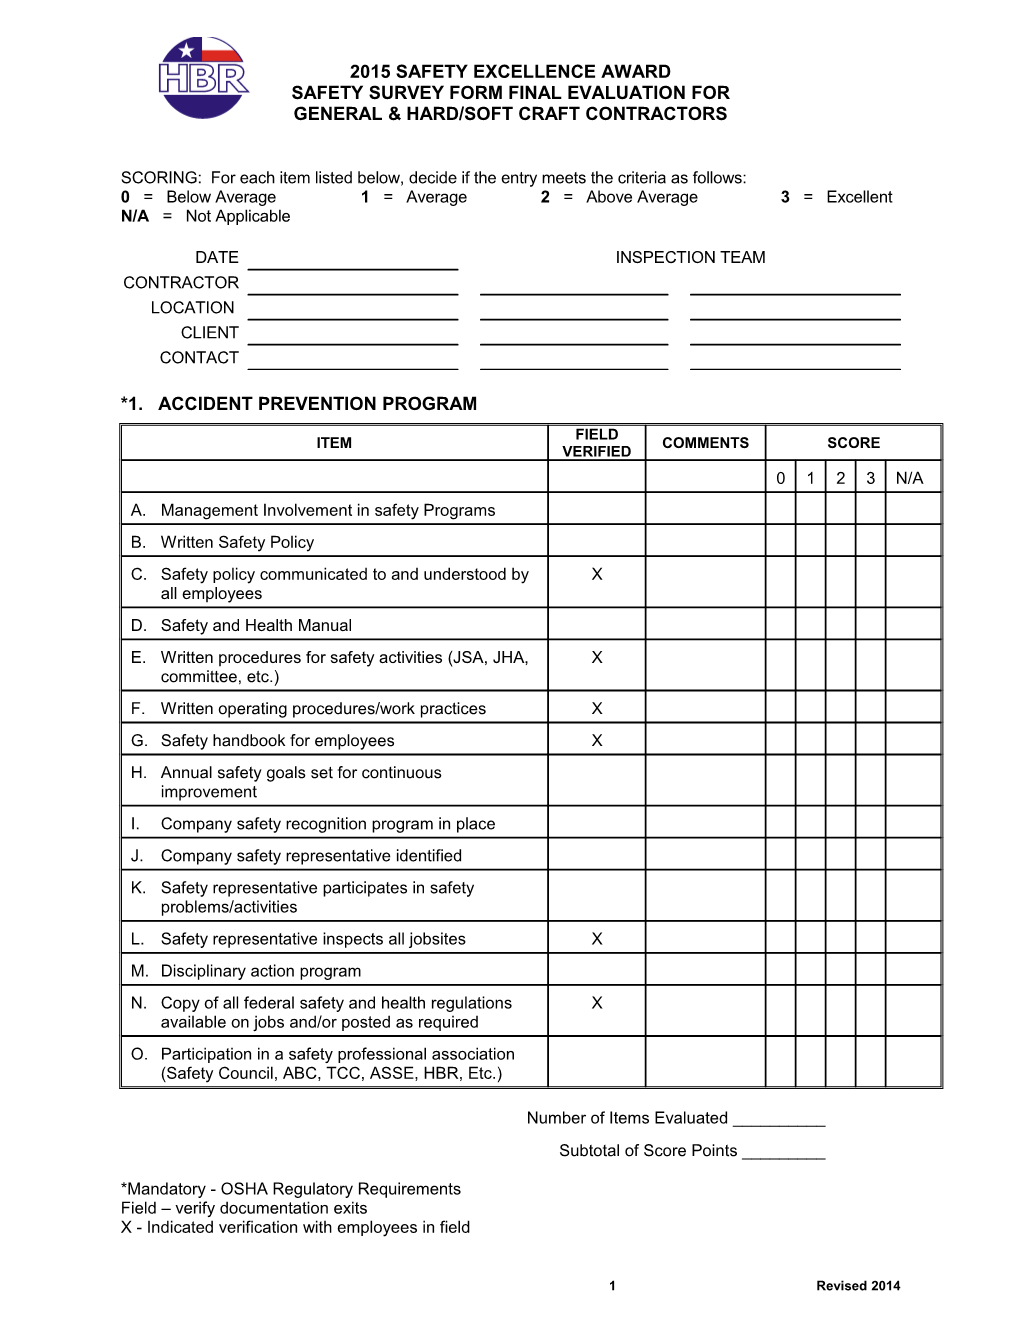 Safety Survey Form Final Evaluation For